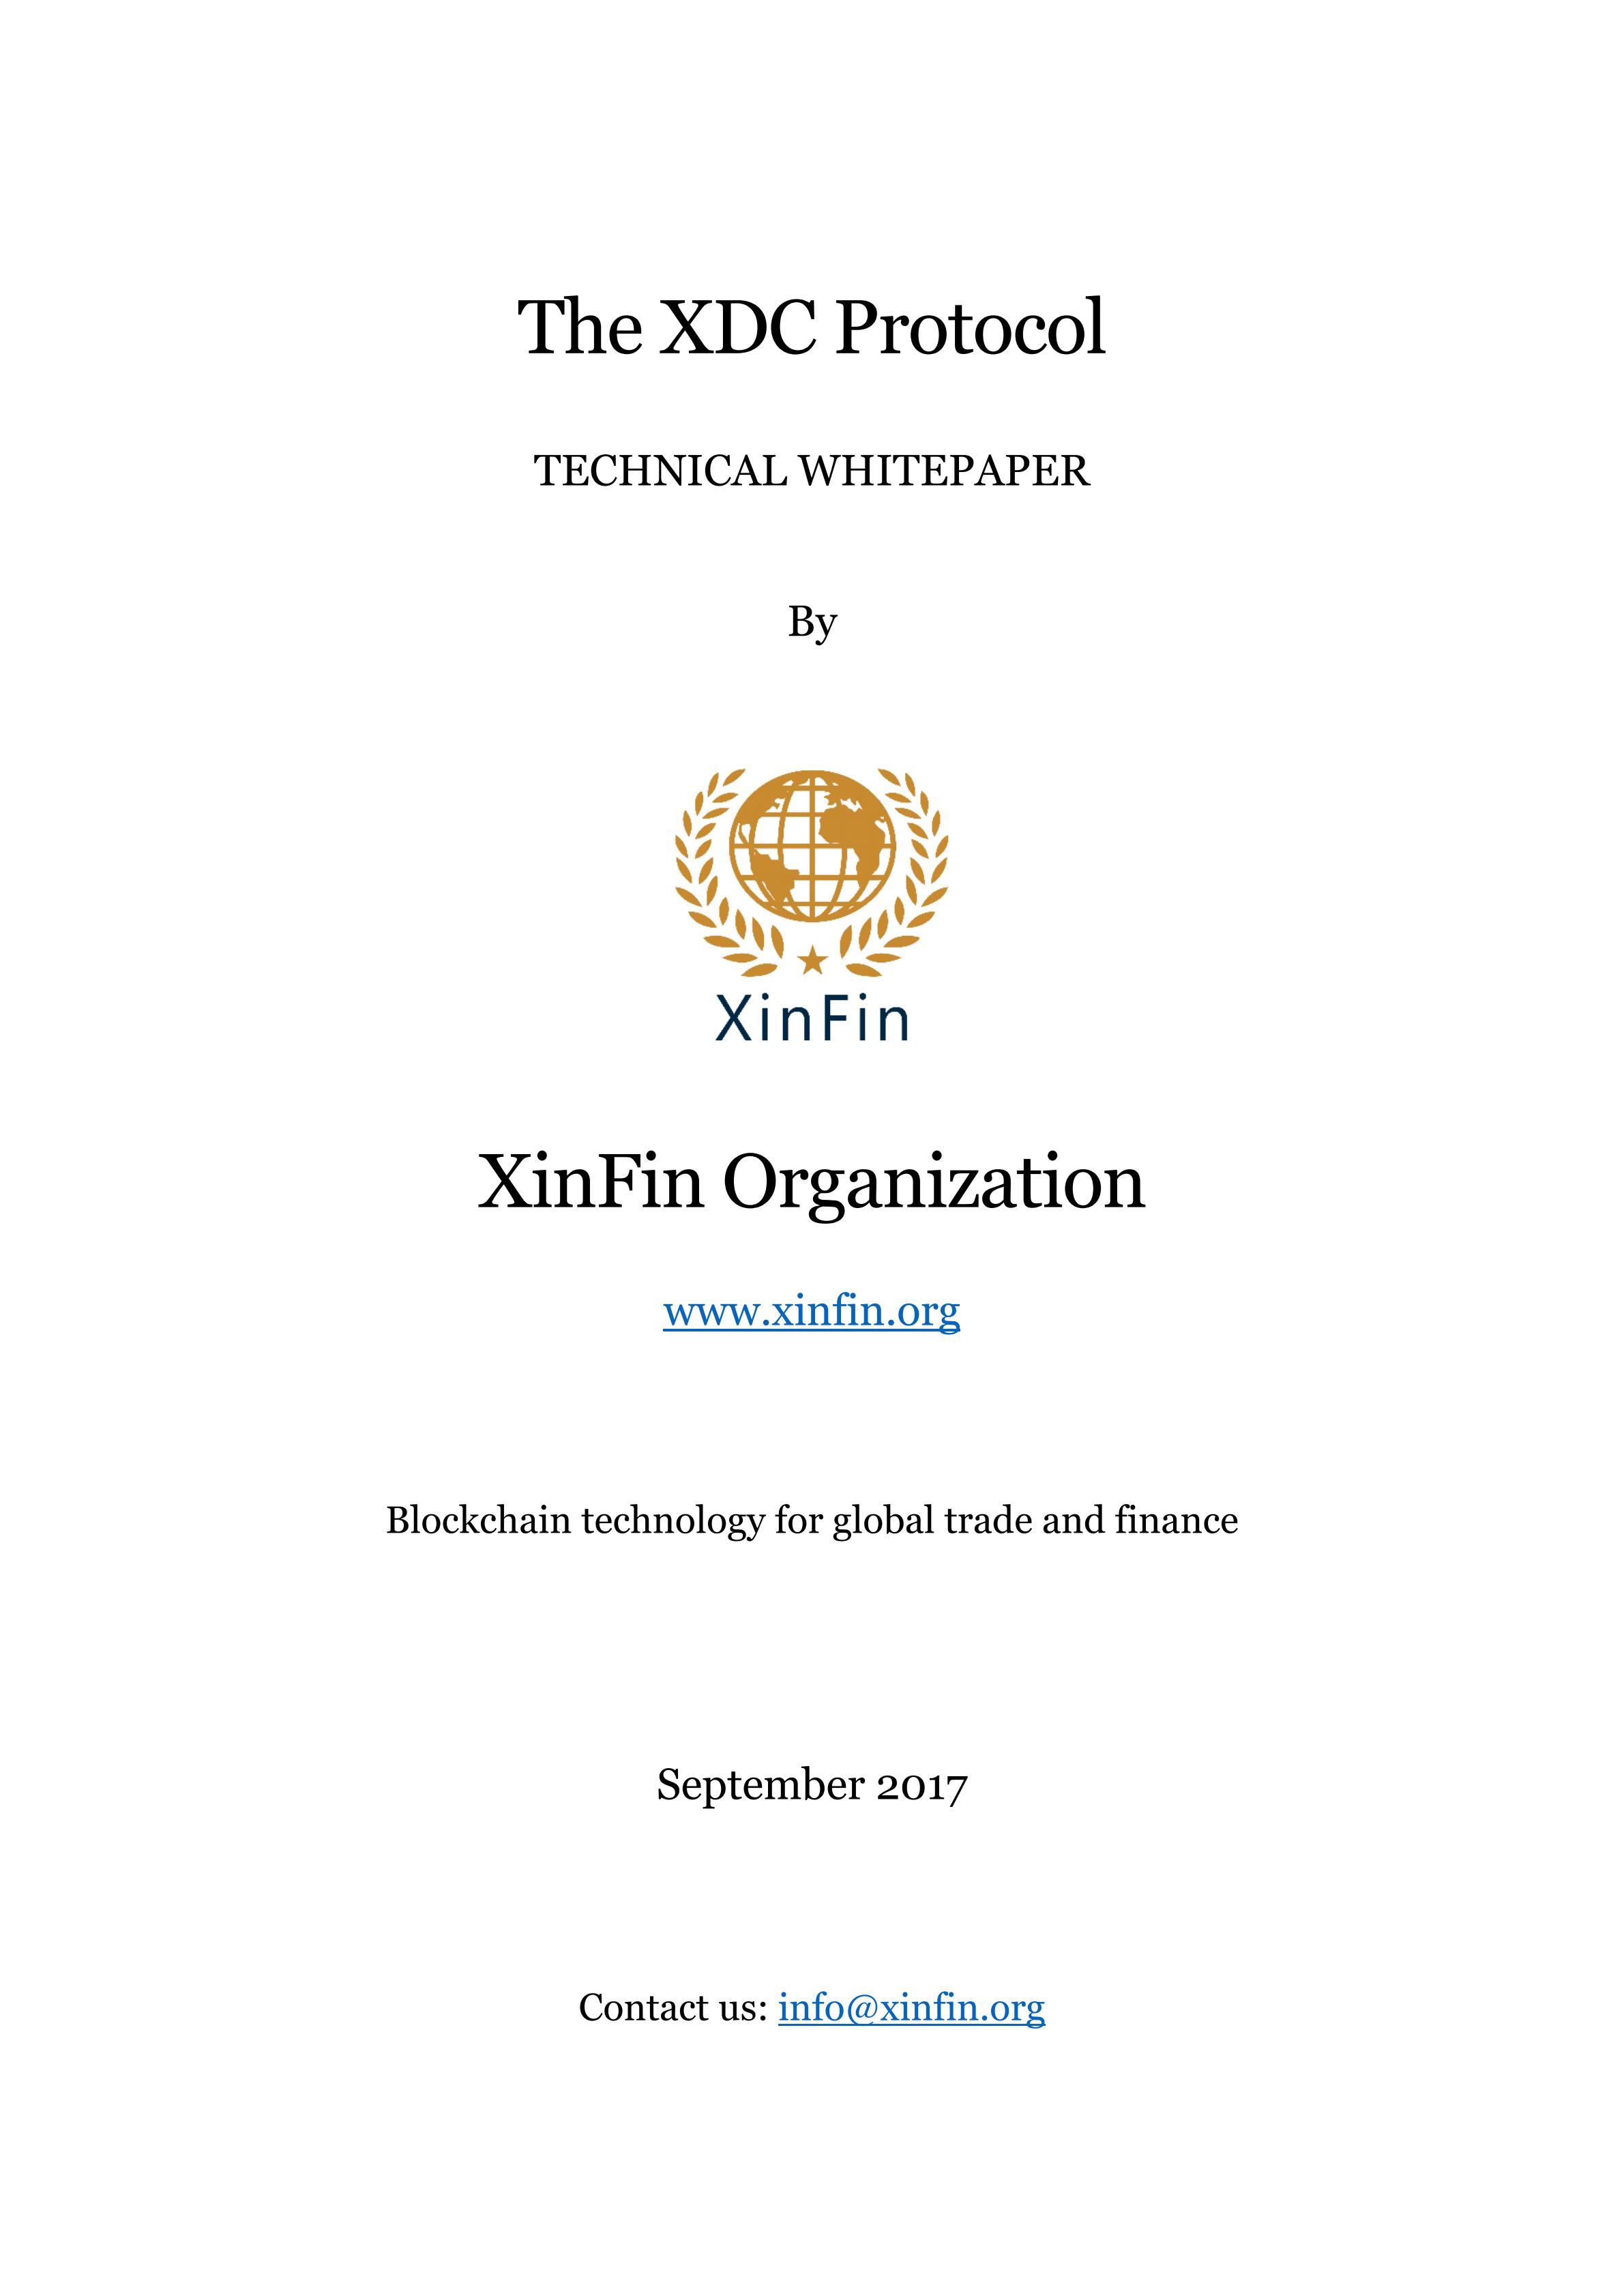 XDCE_The XDC Protocol - Tech Whitepaper by Xinfin Organization V1.0_00.jpg